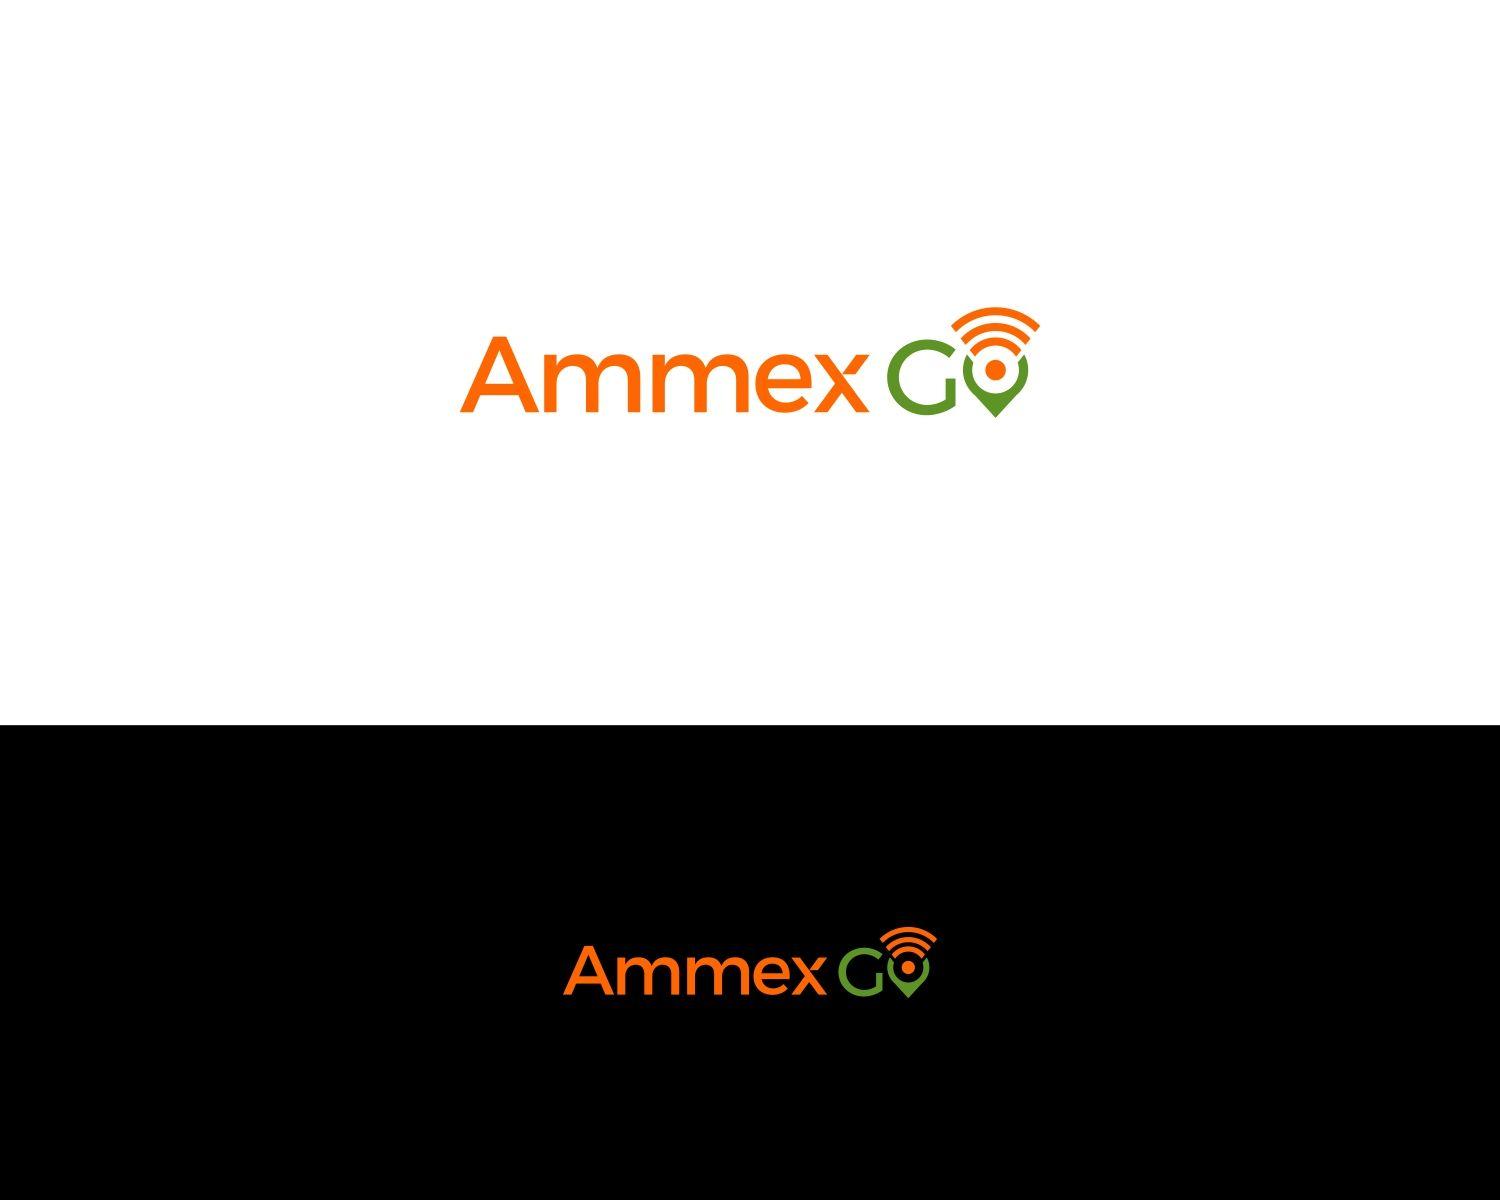 Ammex Logo - Logo Design. 'Ammex Go' design project. DesignContest ®